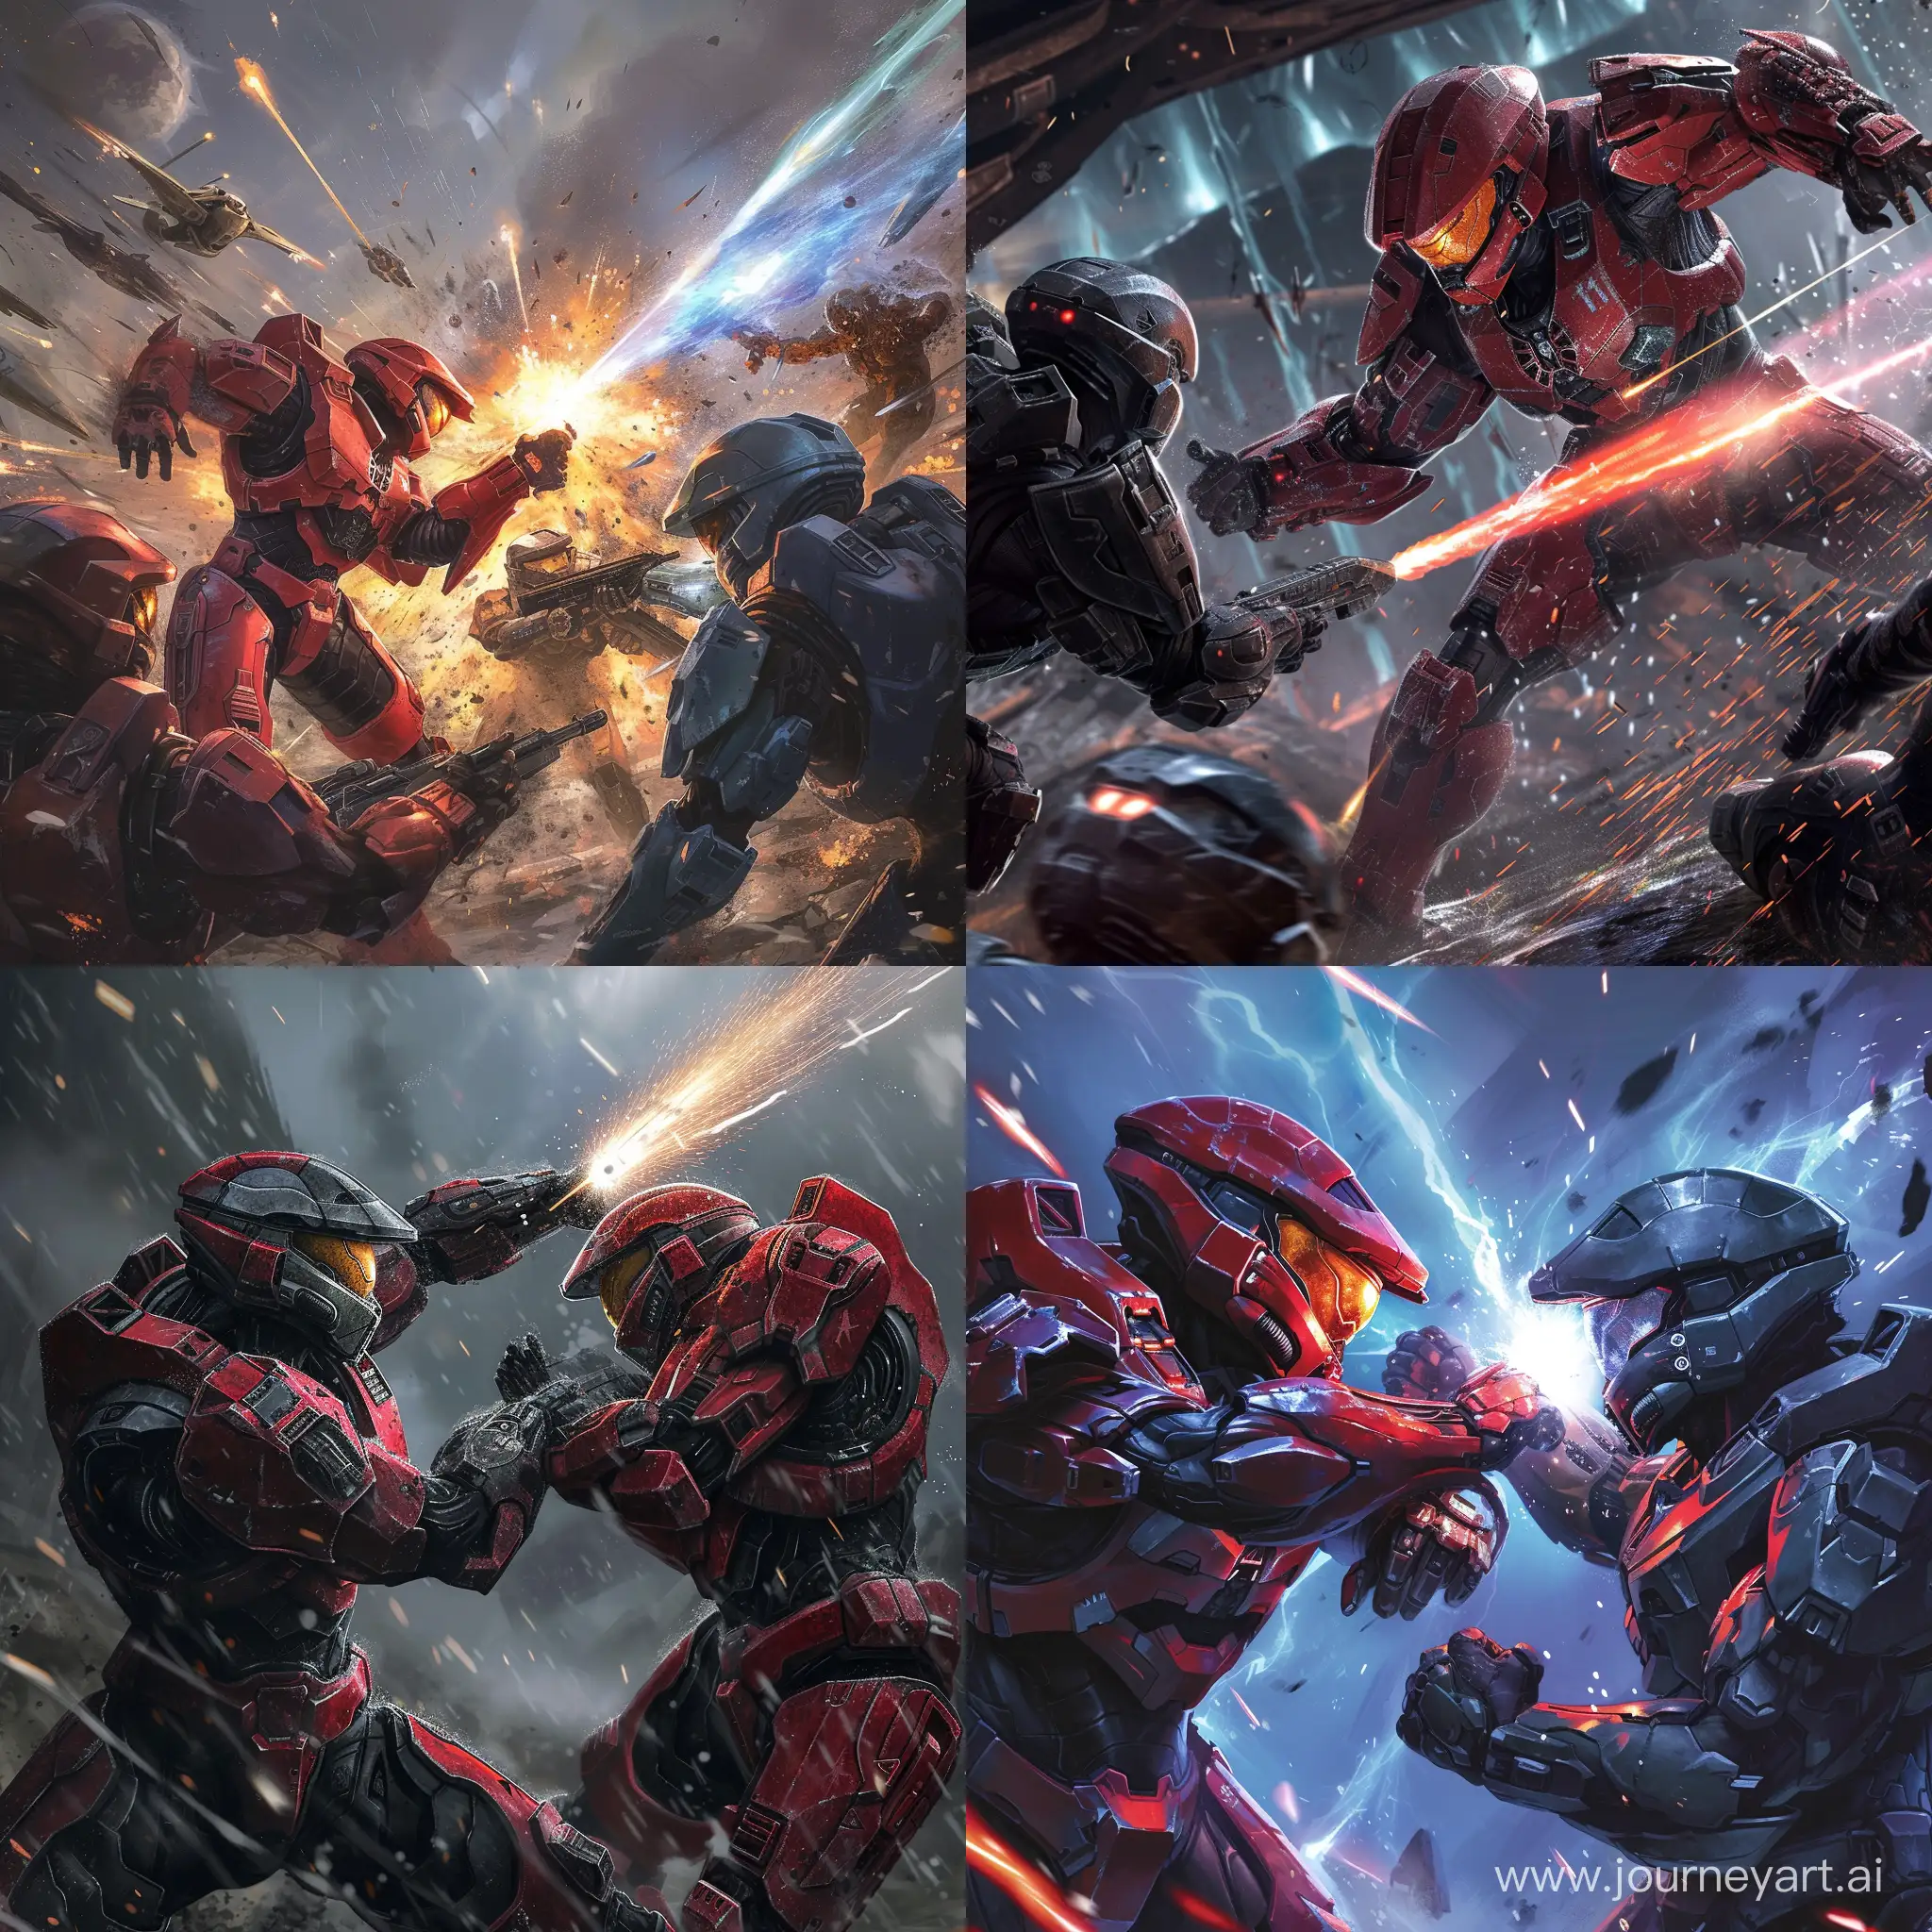 Epic-Showdown-Atriox-Battles-Noble-Six-in-Halo-Combat